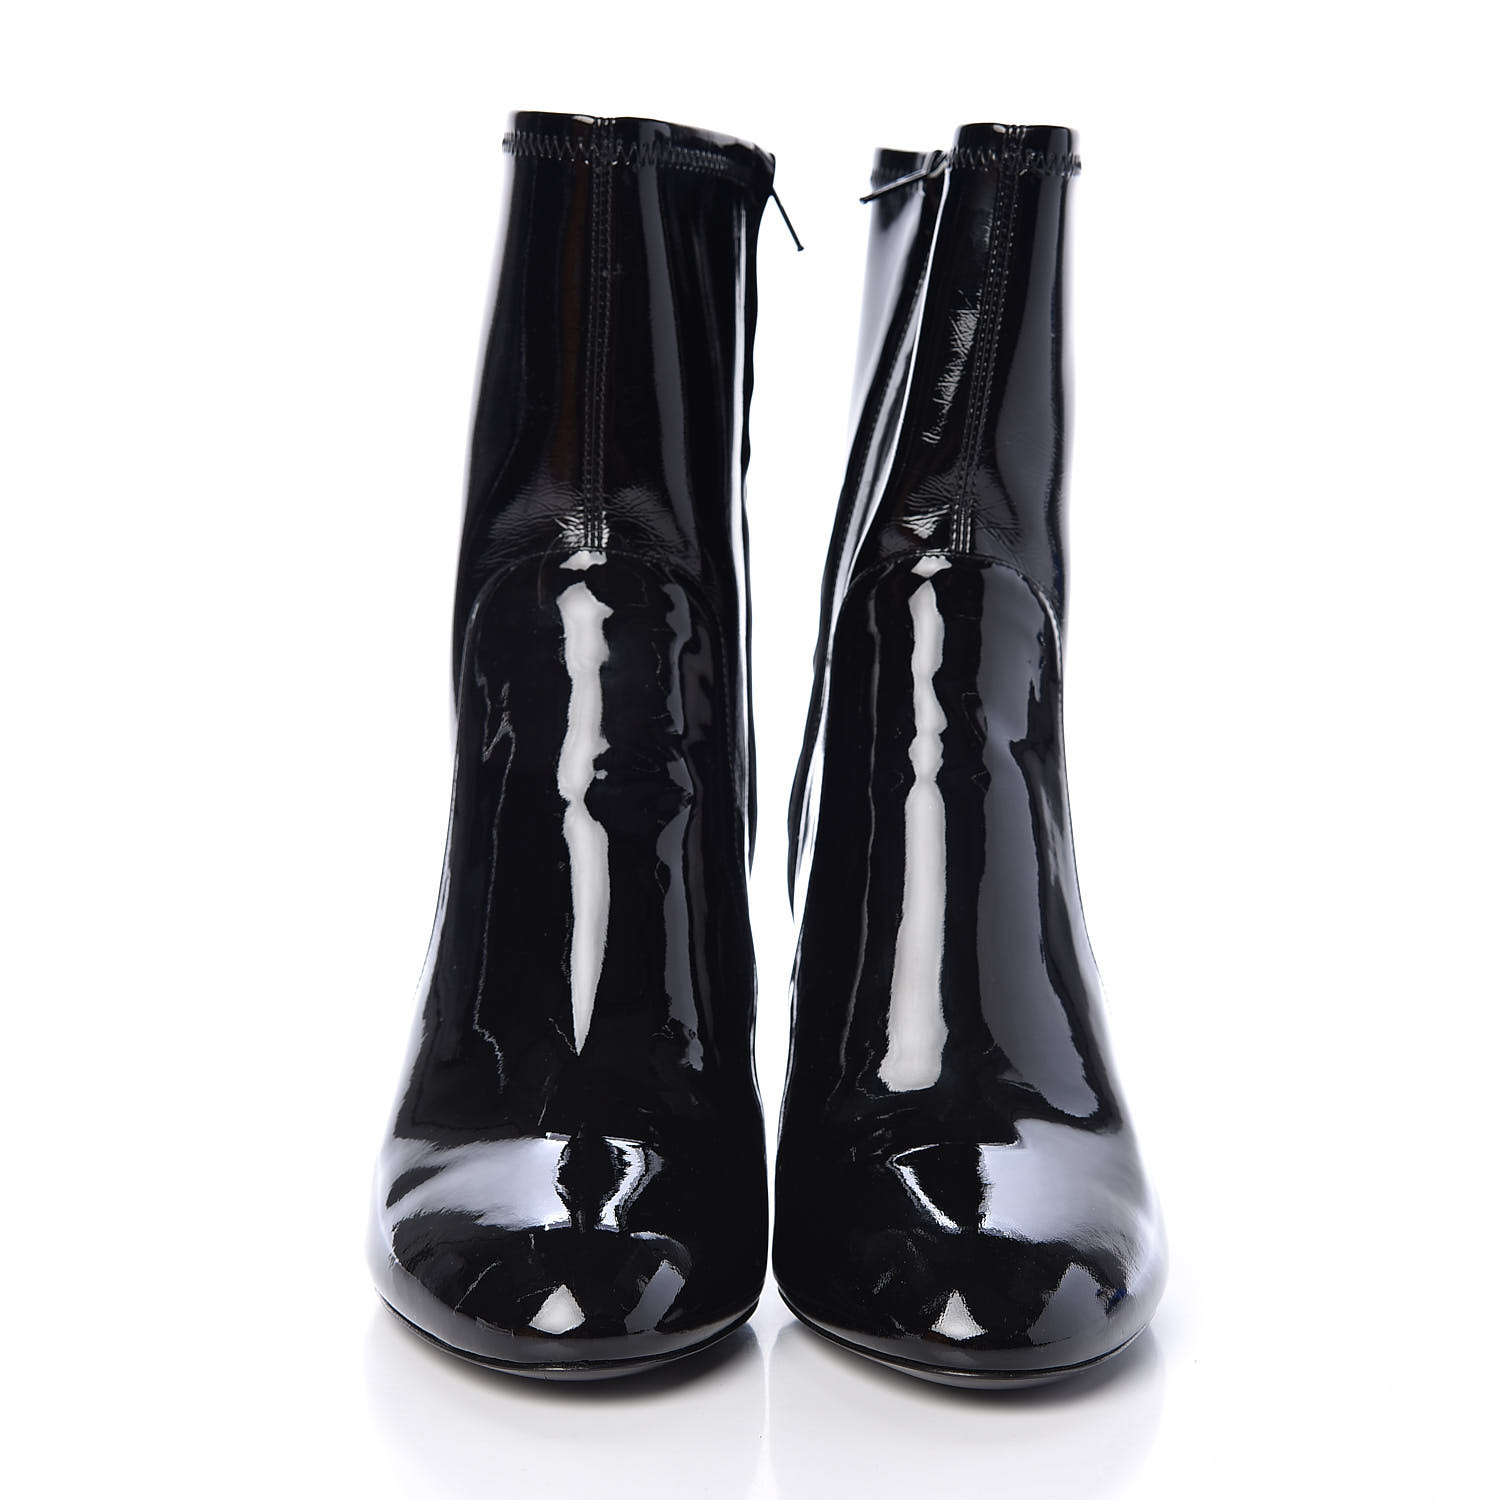 LOUIS VUITTON Patent Silhouette Ankle Boots 38.5 Black 443333